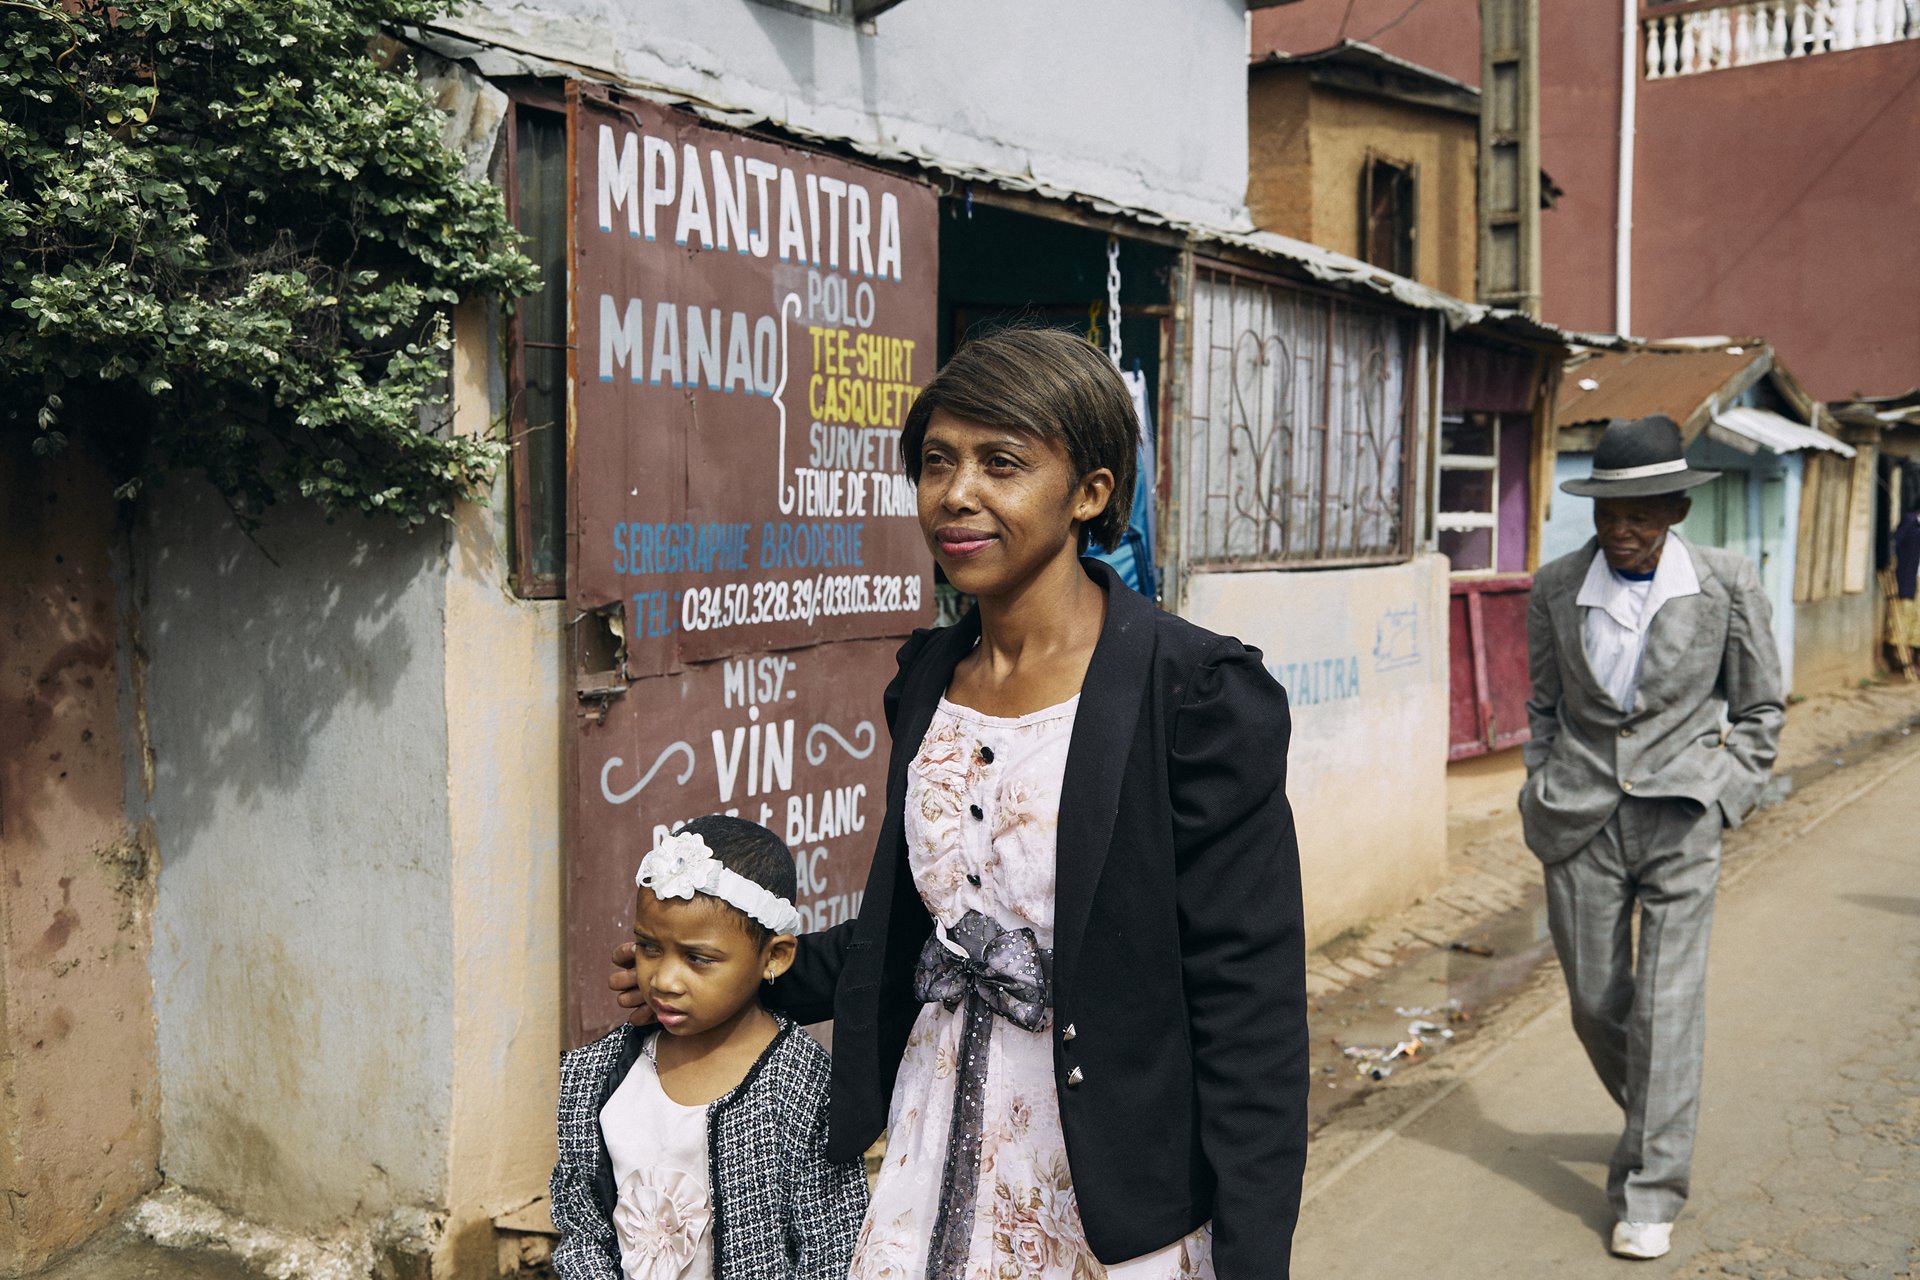 Fara Rafaraniriana walks to church on Sunday morning with her daughter Odliatemix and her father Dada Paul, in Antananarivo, Madagascar.